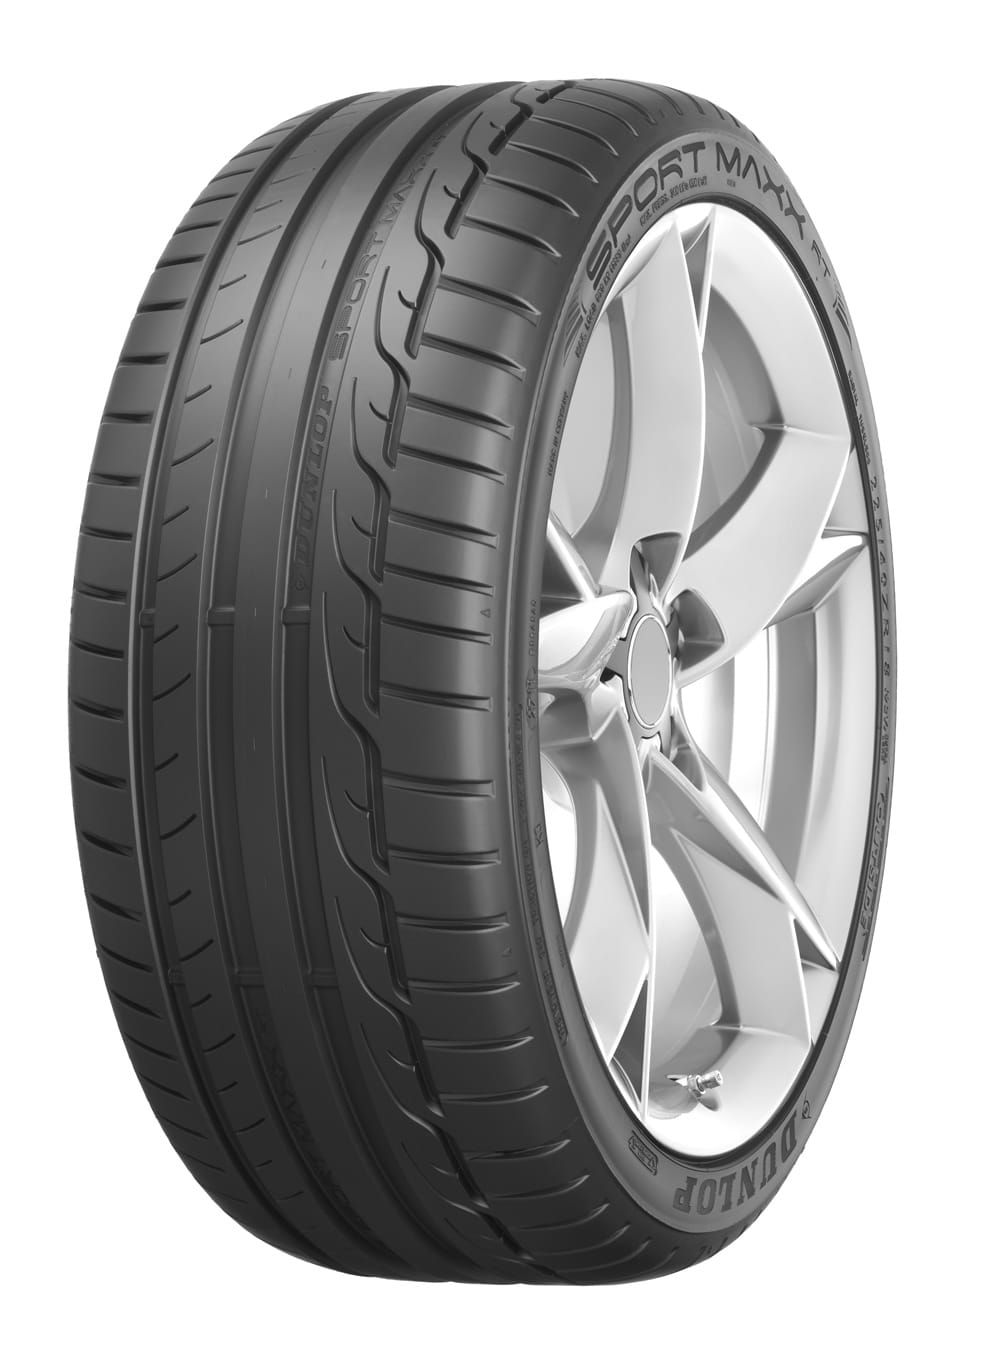 Gomme Nuove Dunlop 205/45 R16 83W Sport Maxx RT MFS pneumatici nuovi Estivo